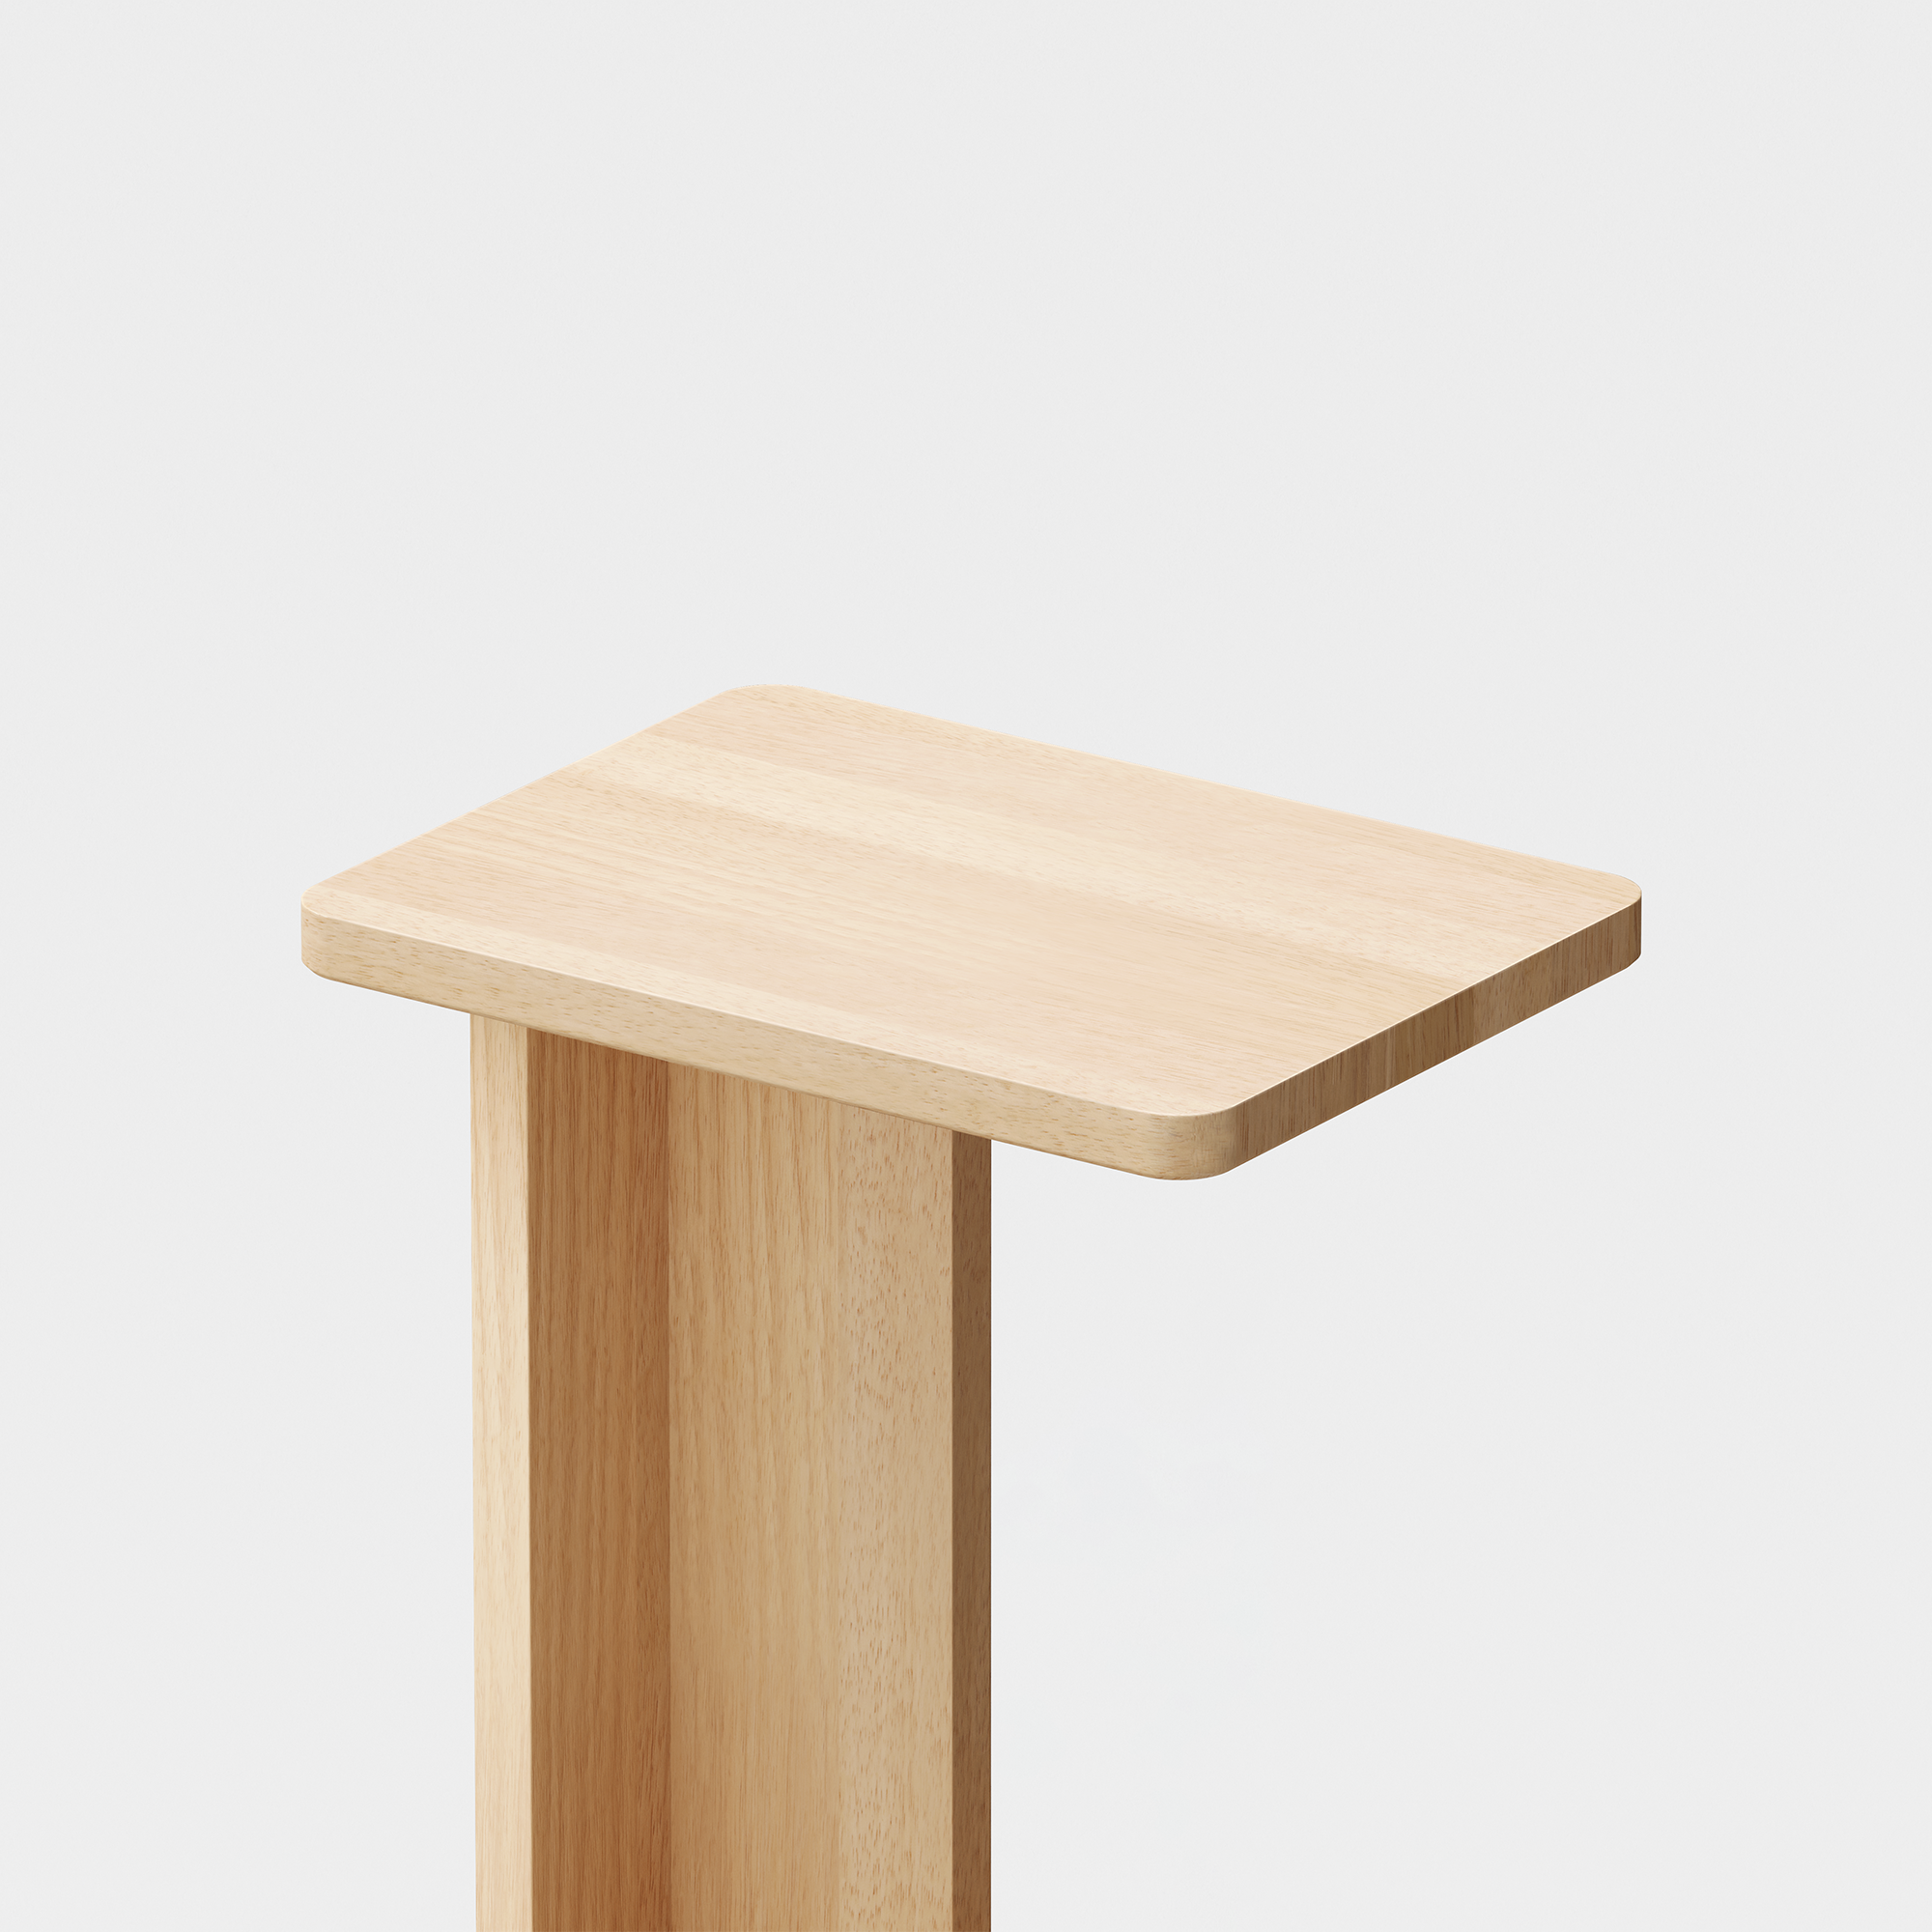 C Side Table (Natural) - Render - Top